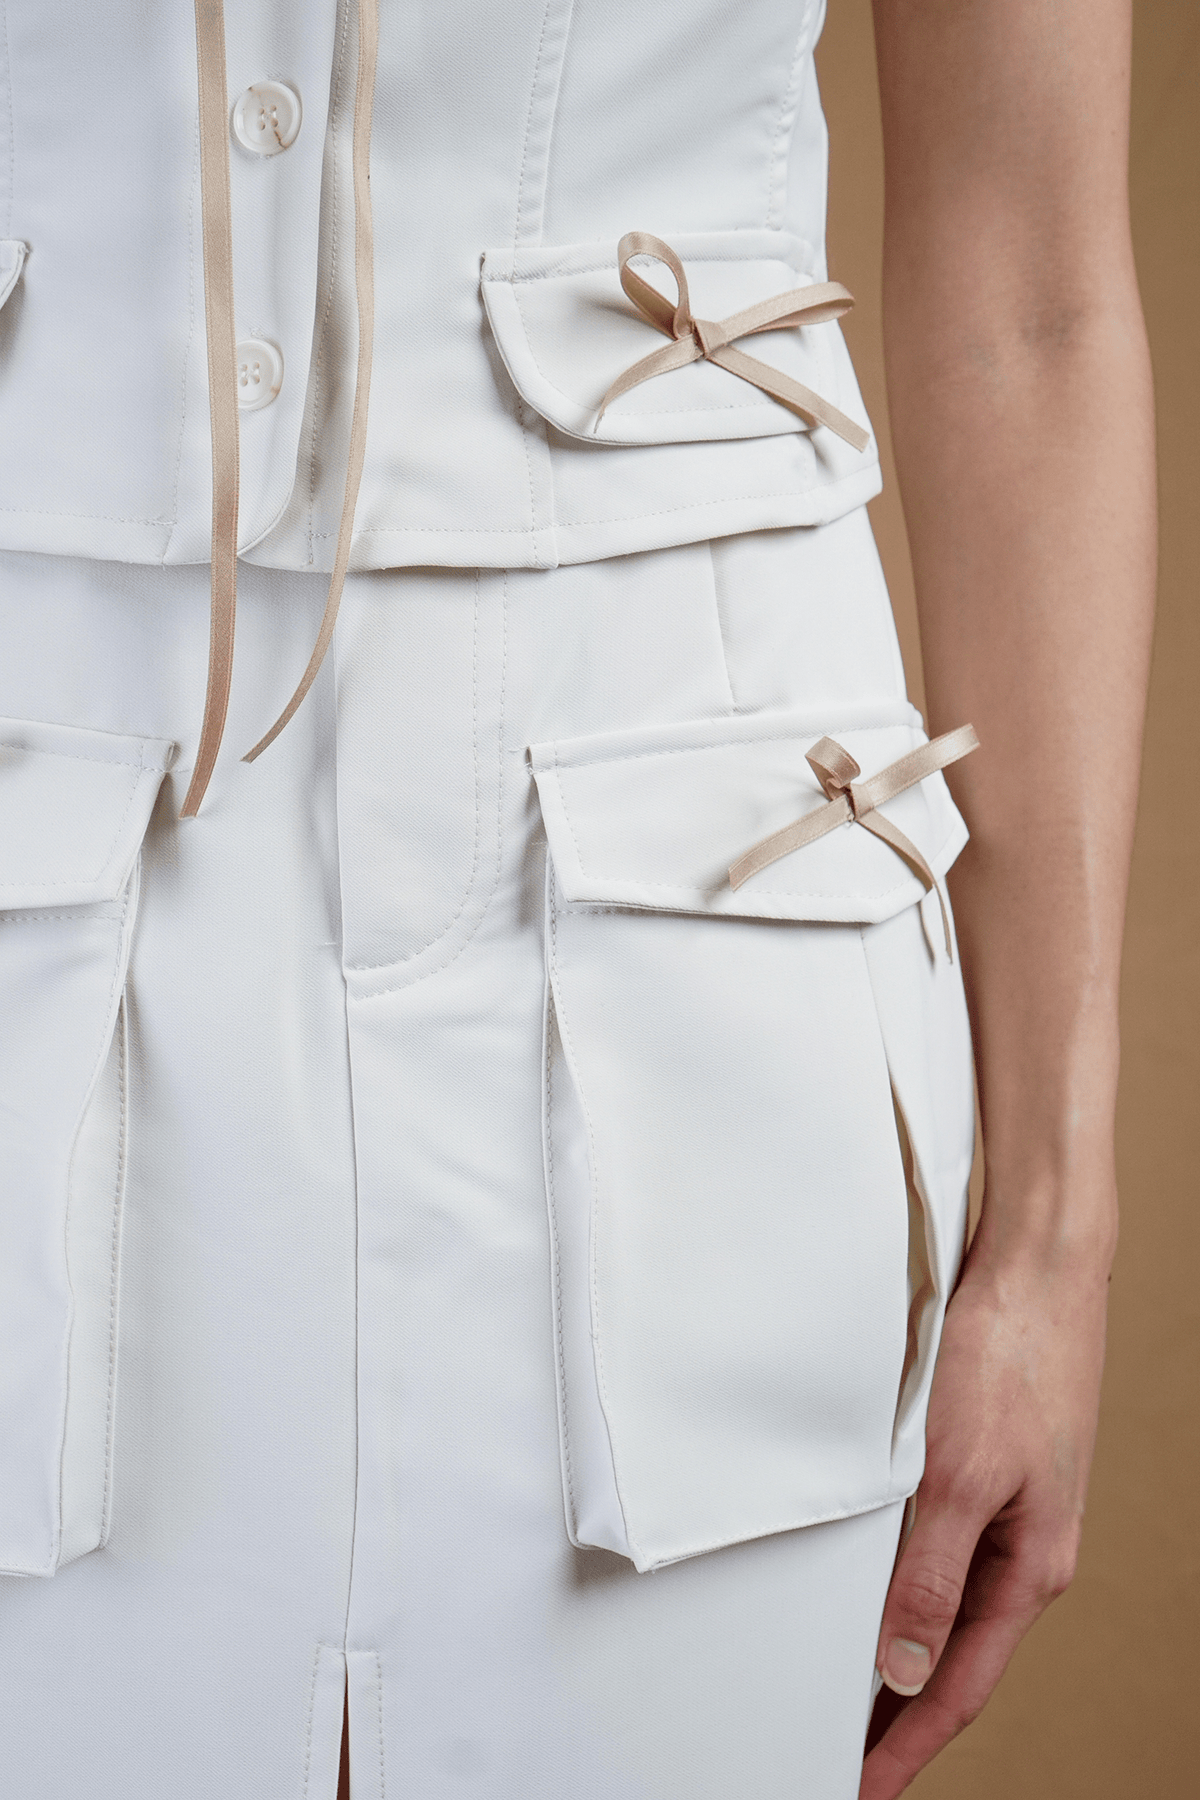 Chloe Dao Boutique SETS Ivory Mini Bow Front Slit Skirt